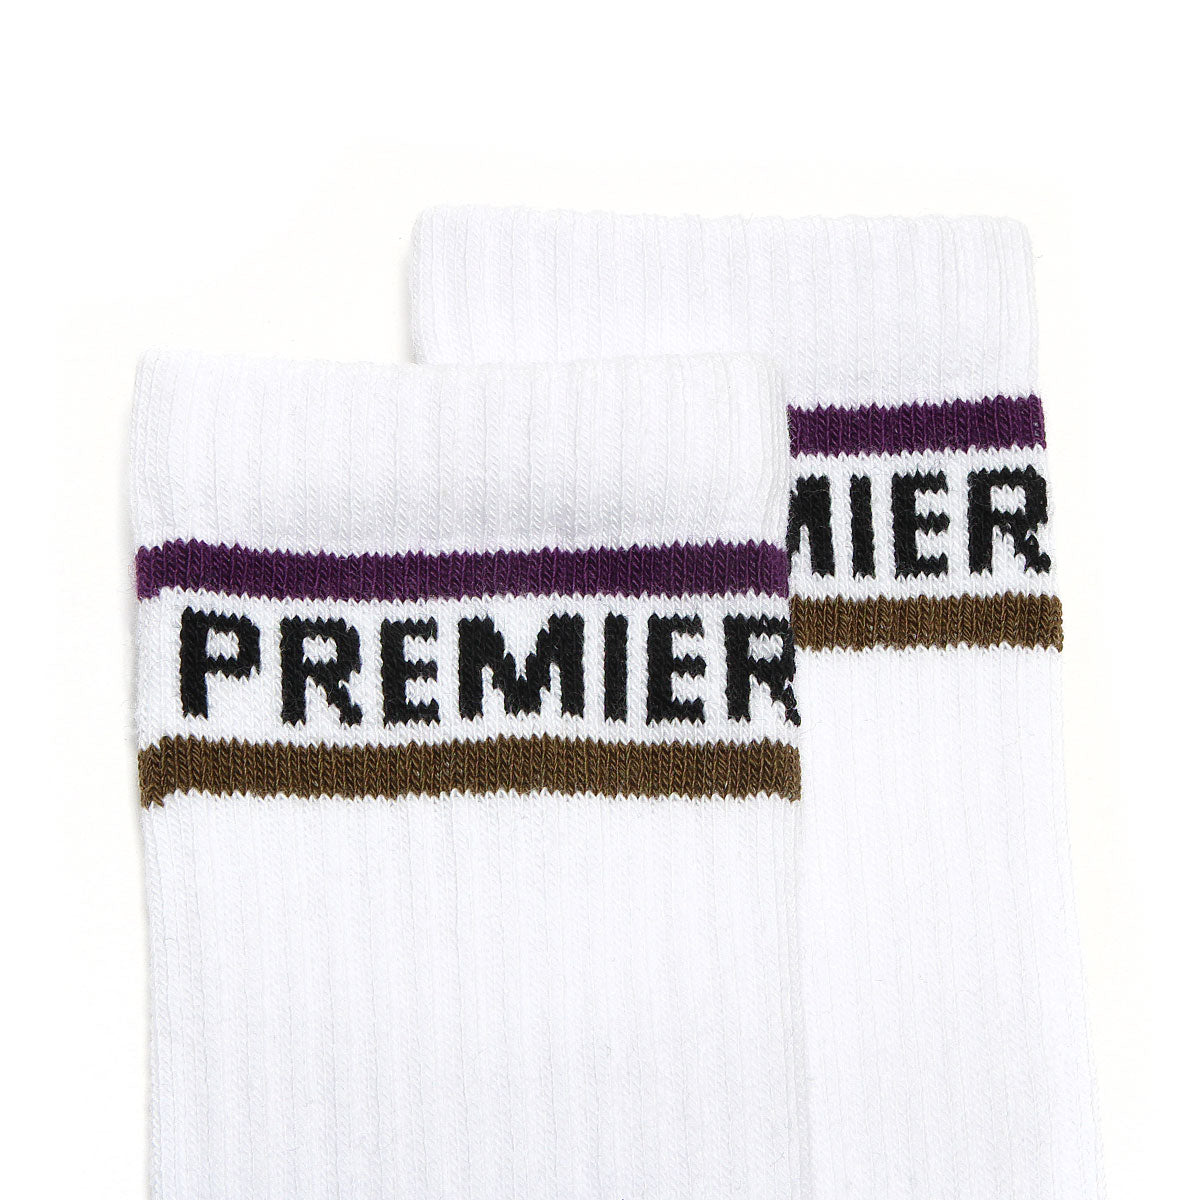 Premier Striped Crew Sock White